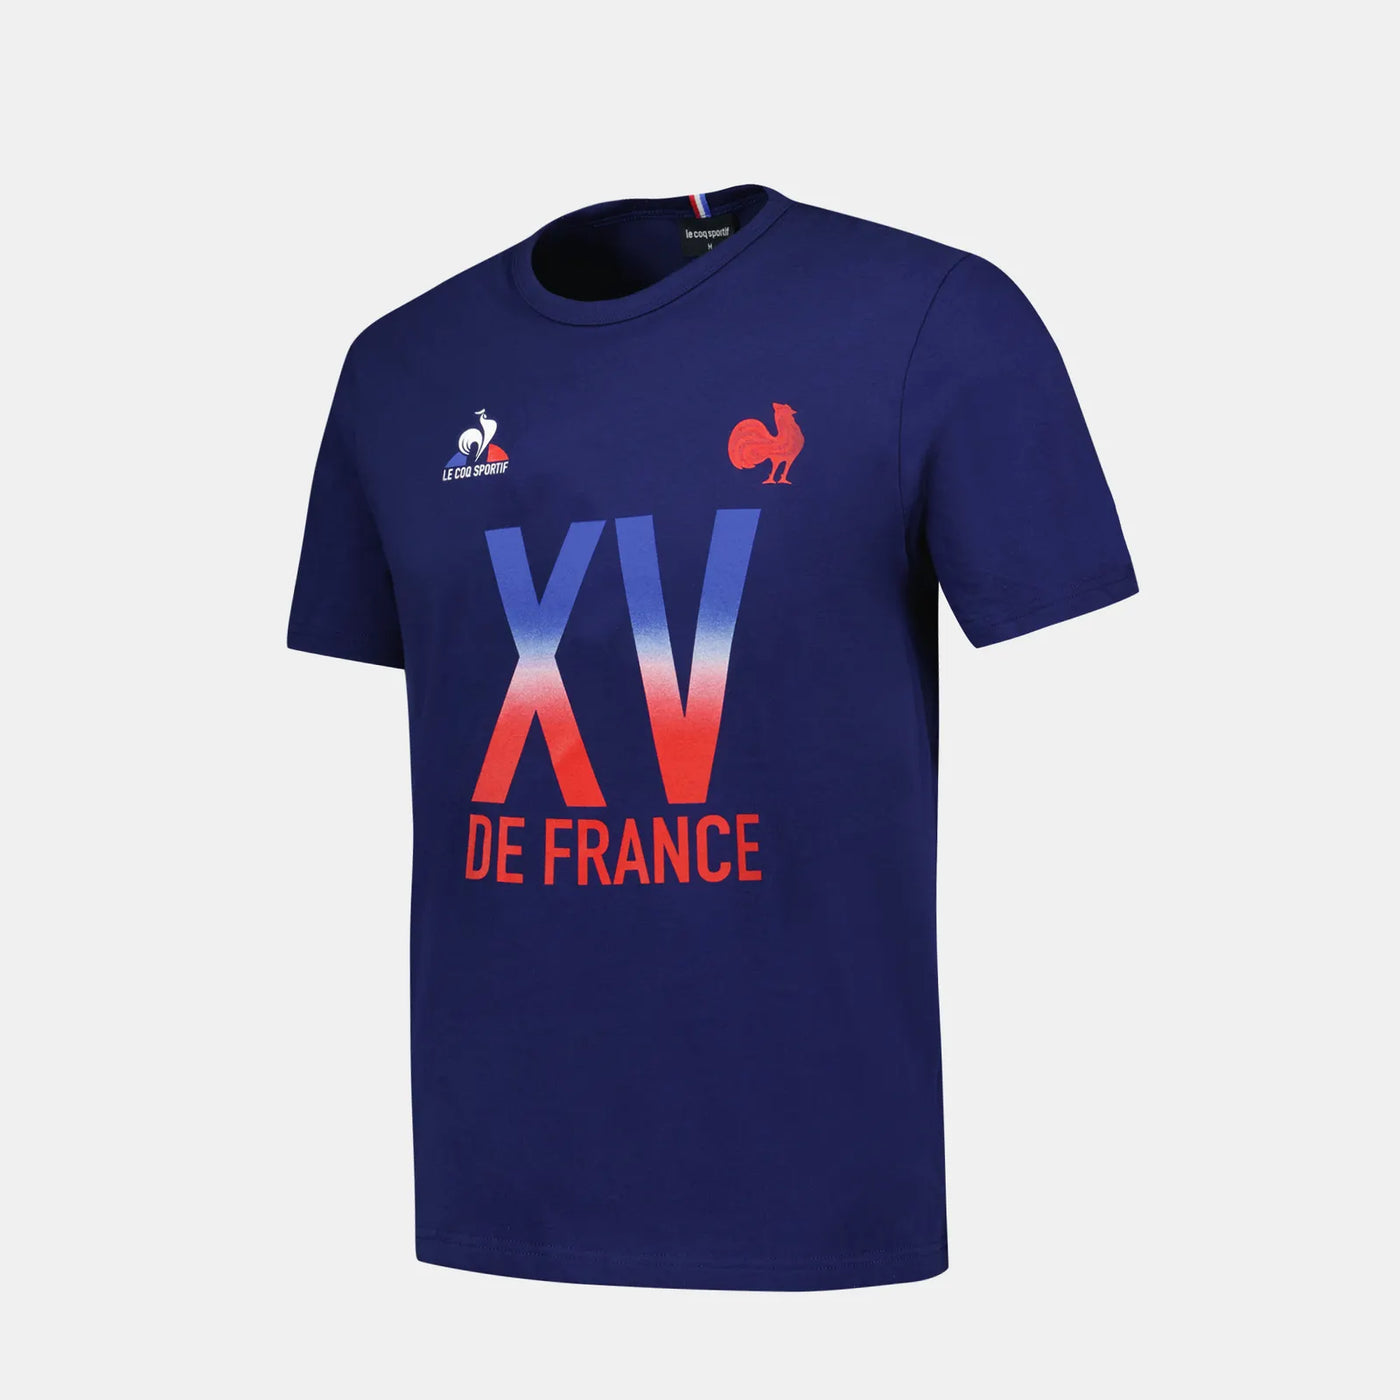 Kids T-shirt Frankrijk - XV de France